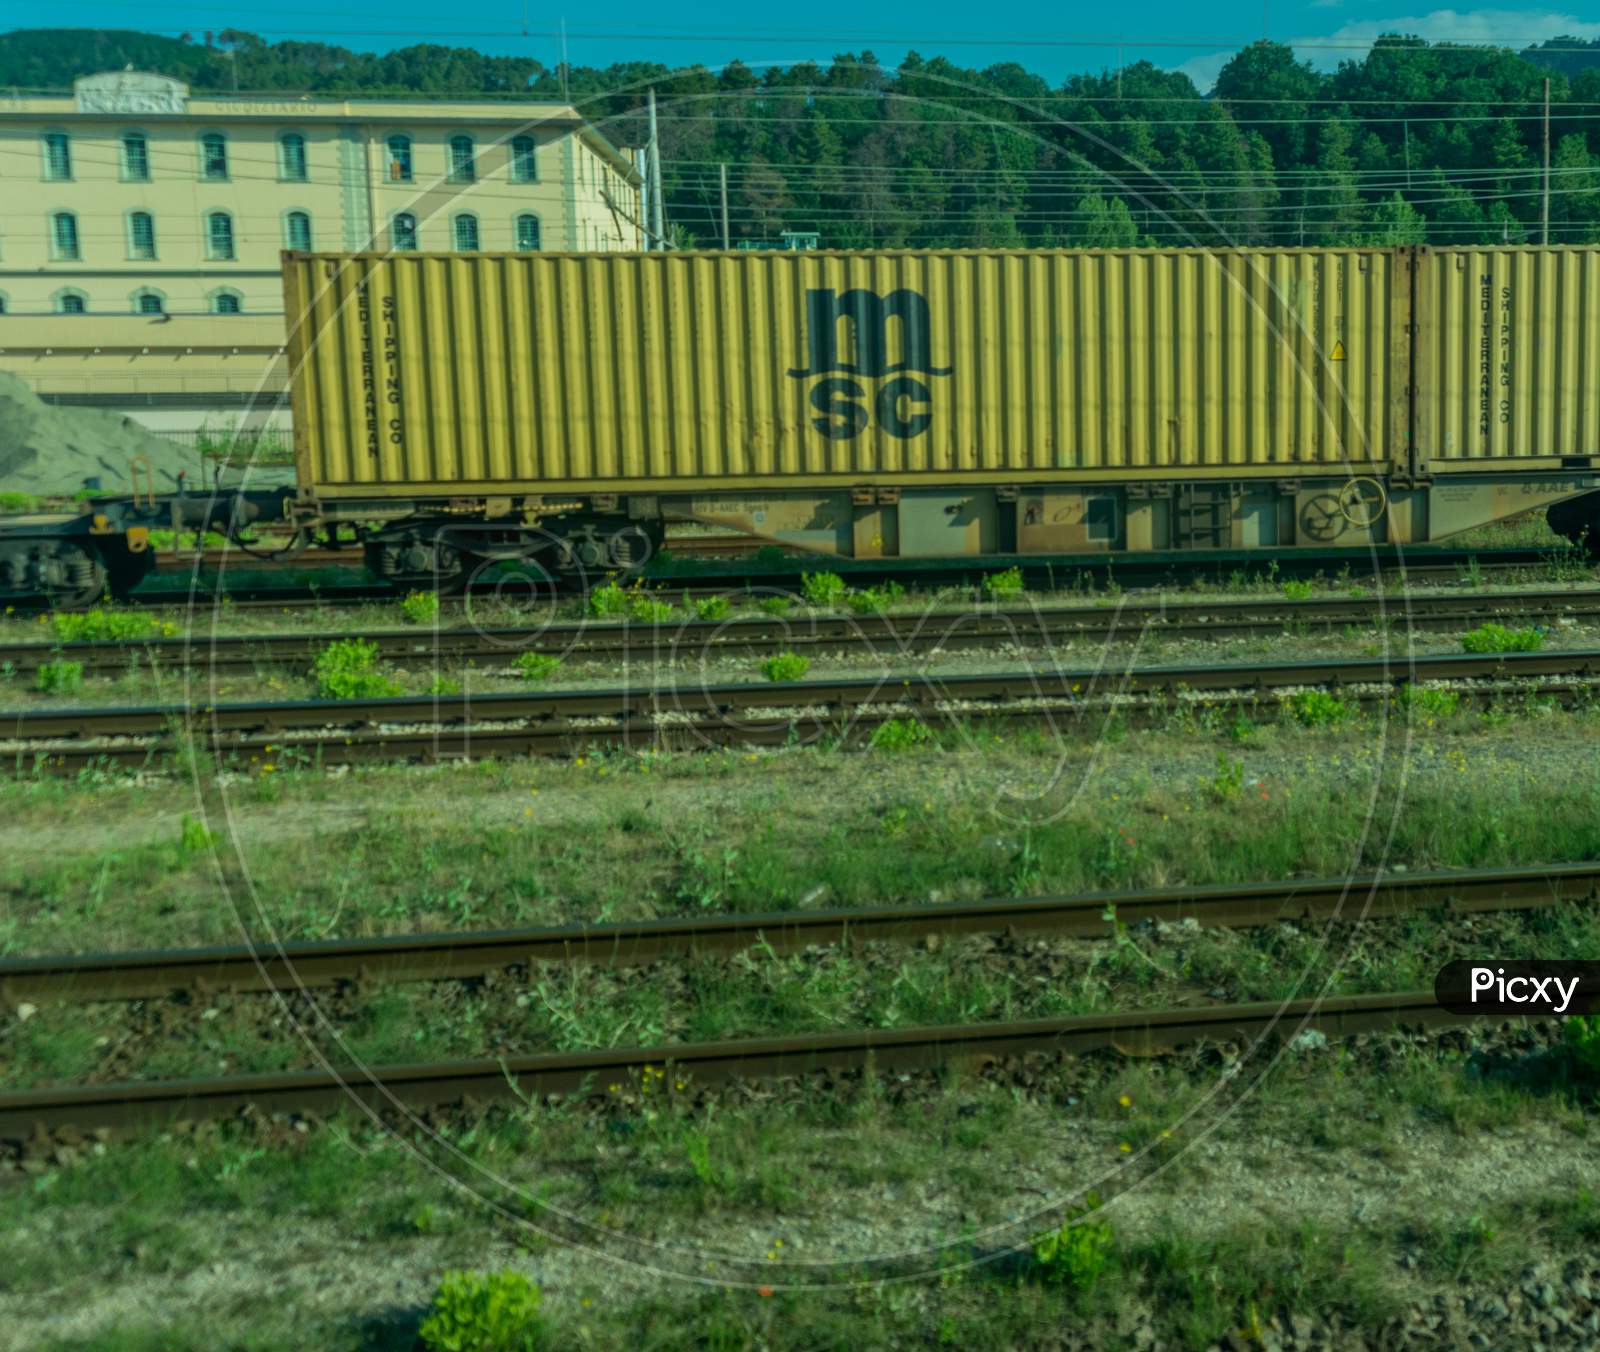 La Spezia, Italy - 28 June 2018: The Msc Container On A Train In Italy